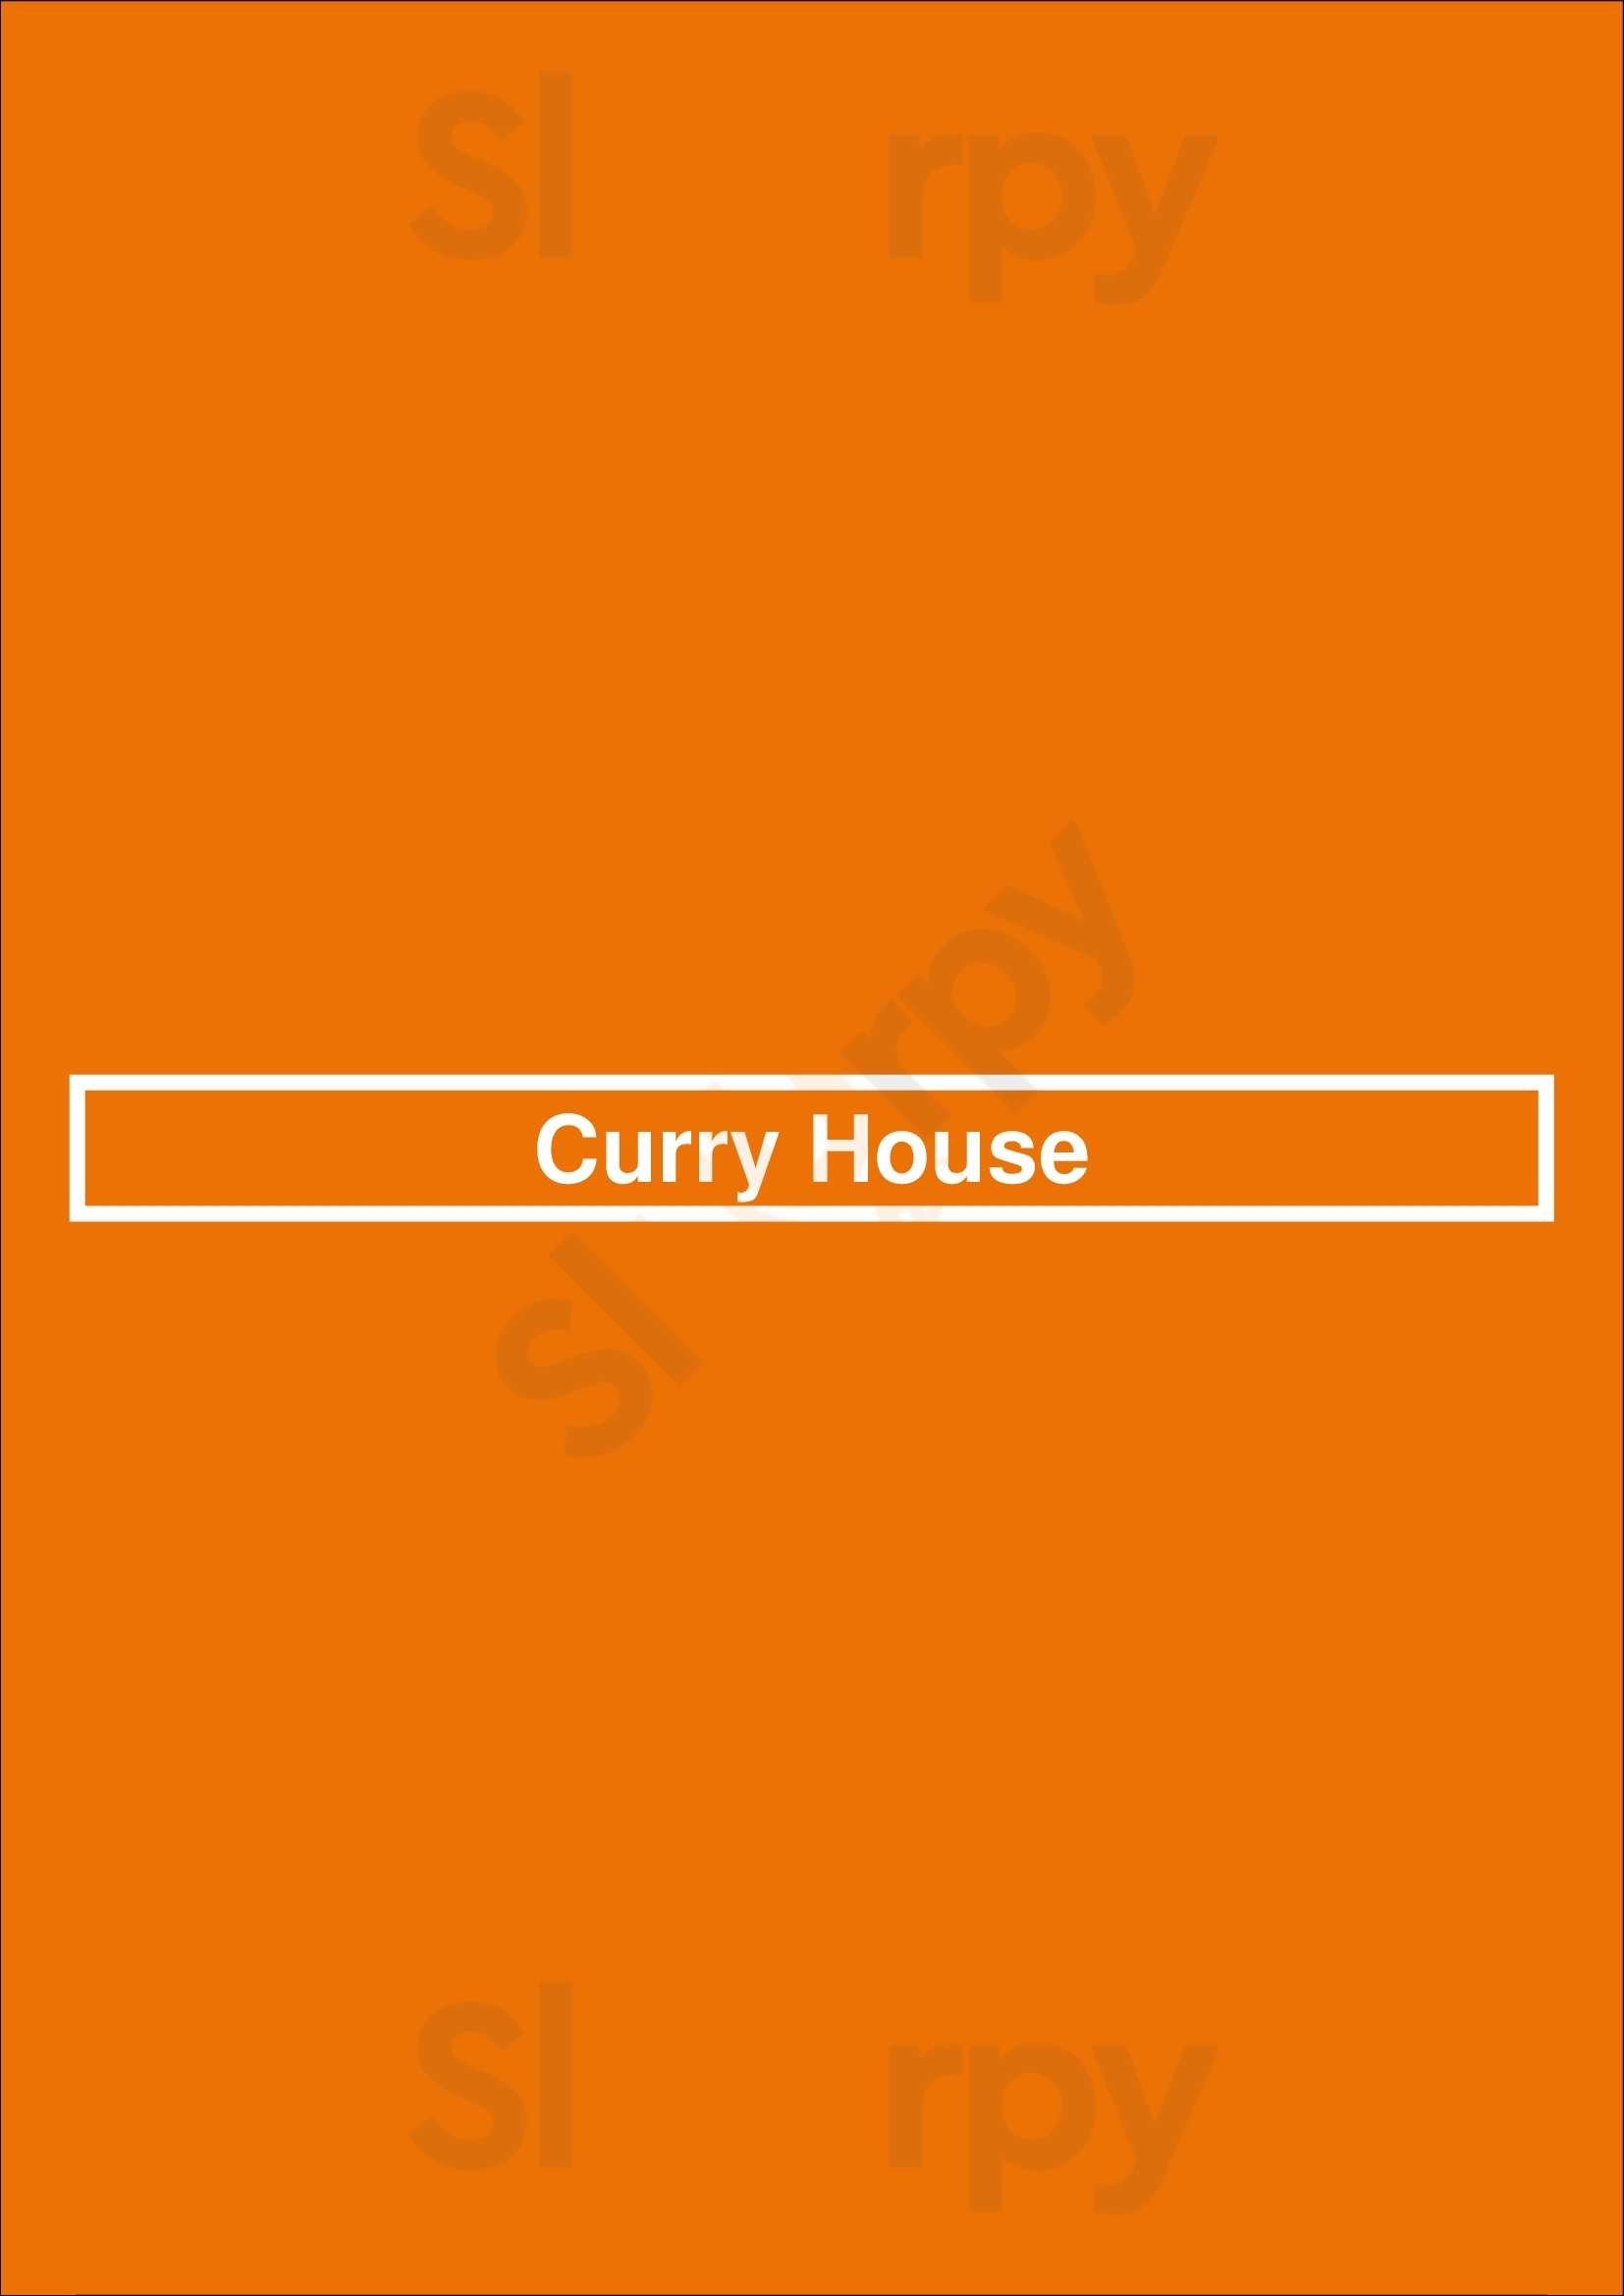 Curry House Playa Blanca Menu - 1